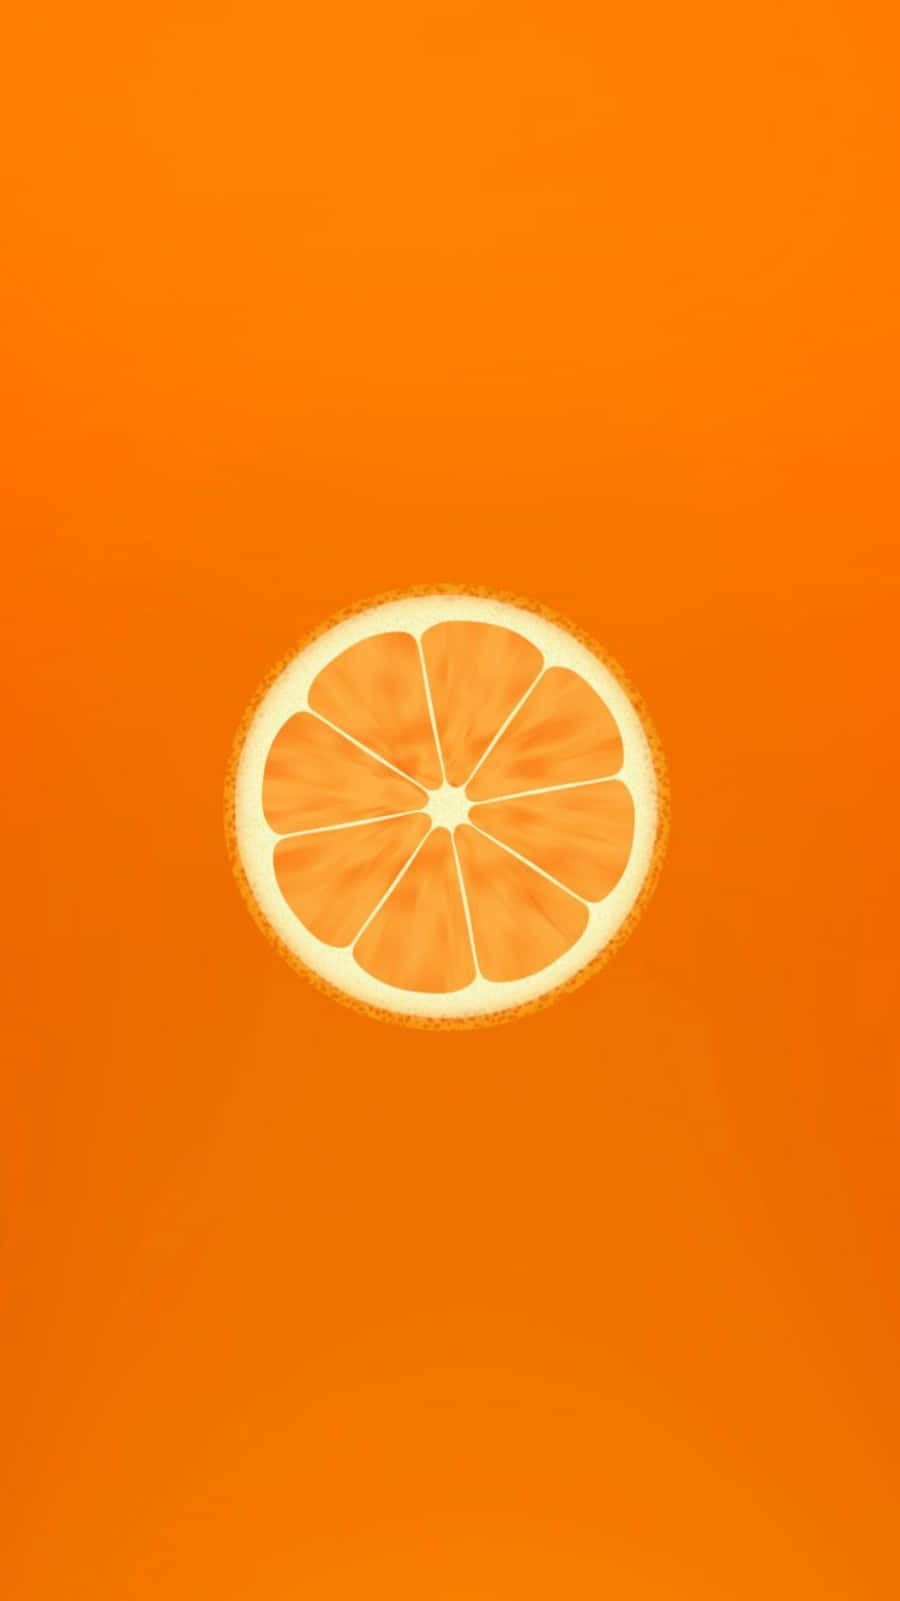 Cute Orange Slice Digital Art Wallpaper